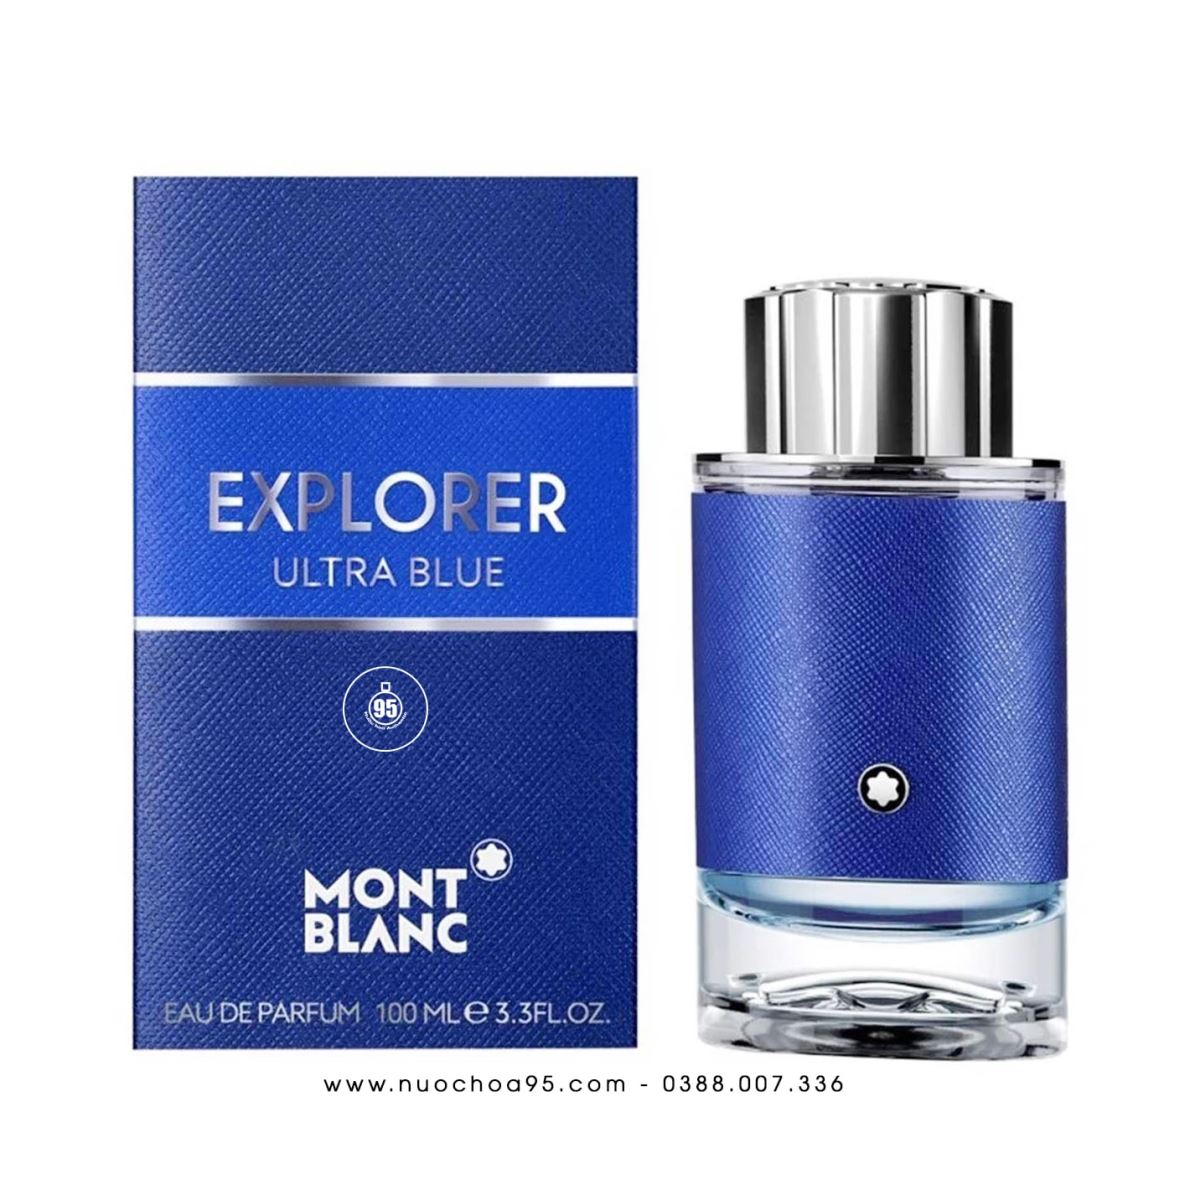 Nước hoa Montblanc Explorer Ultra Blue